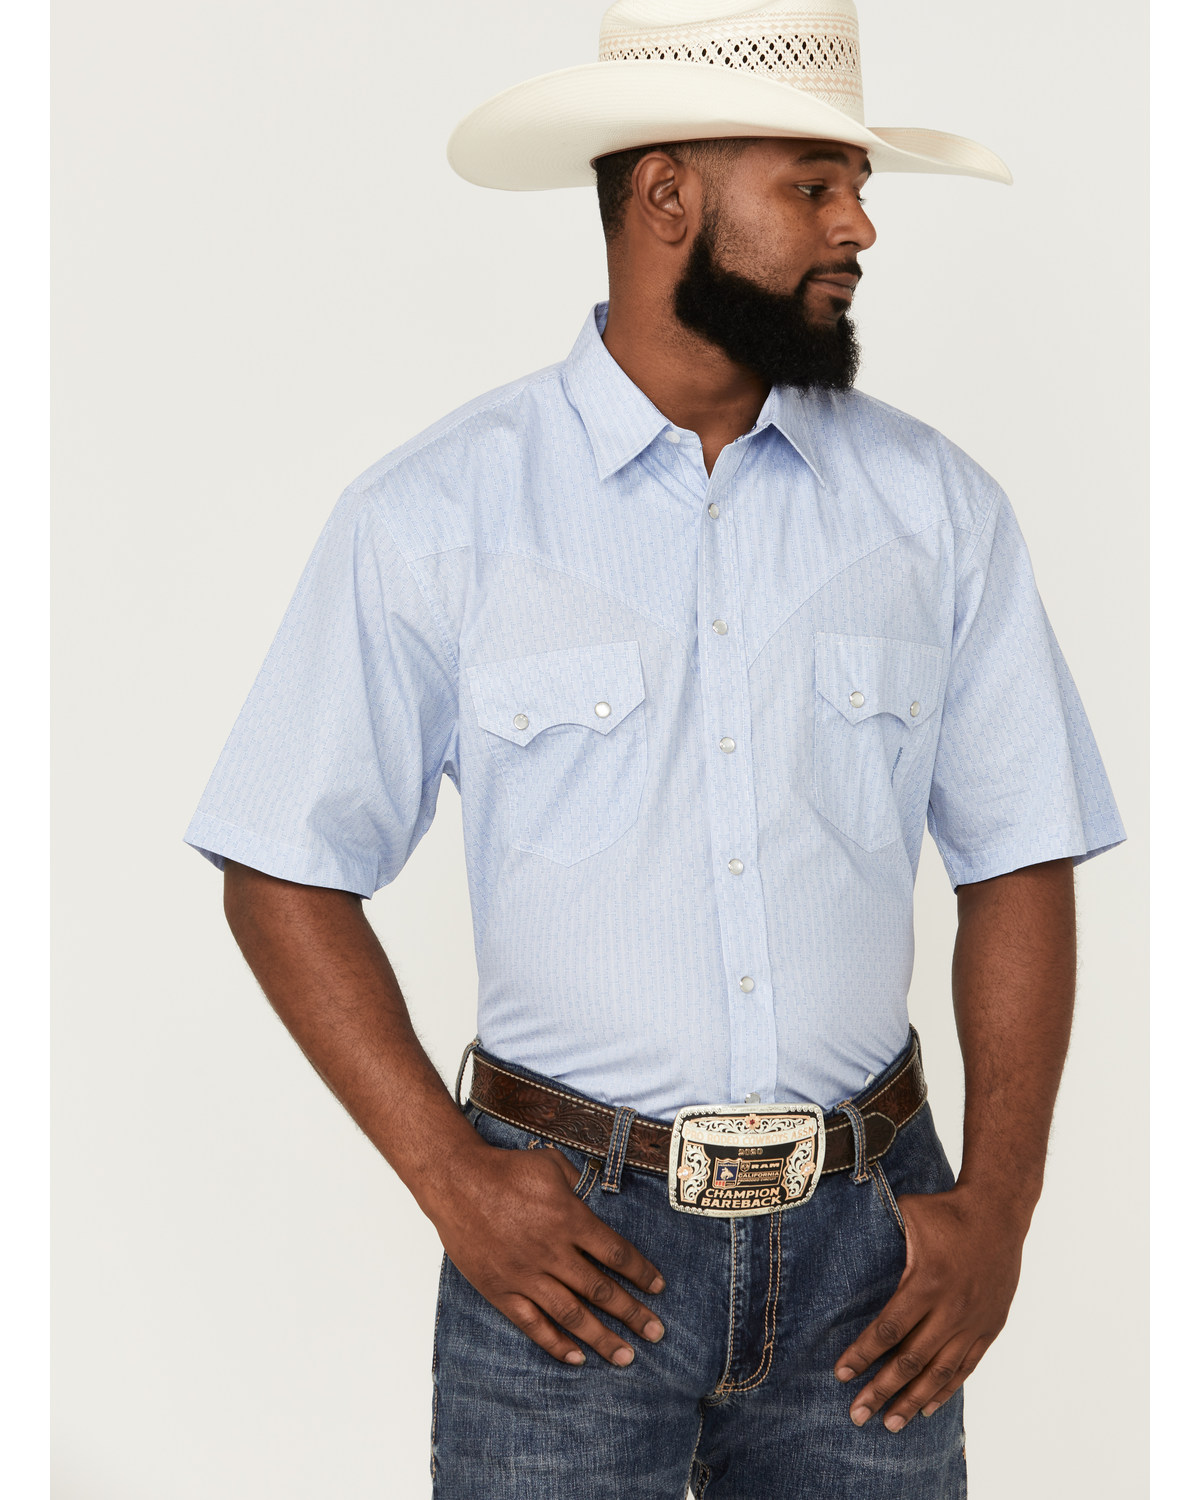 Resistol Men's Destin All-Over Print Short Sleeve Pearl Snap Western Shirt